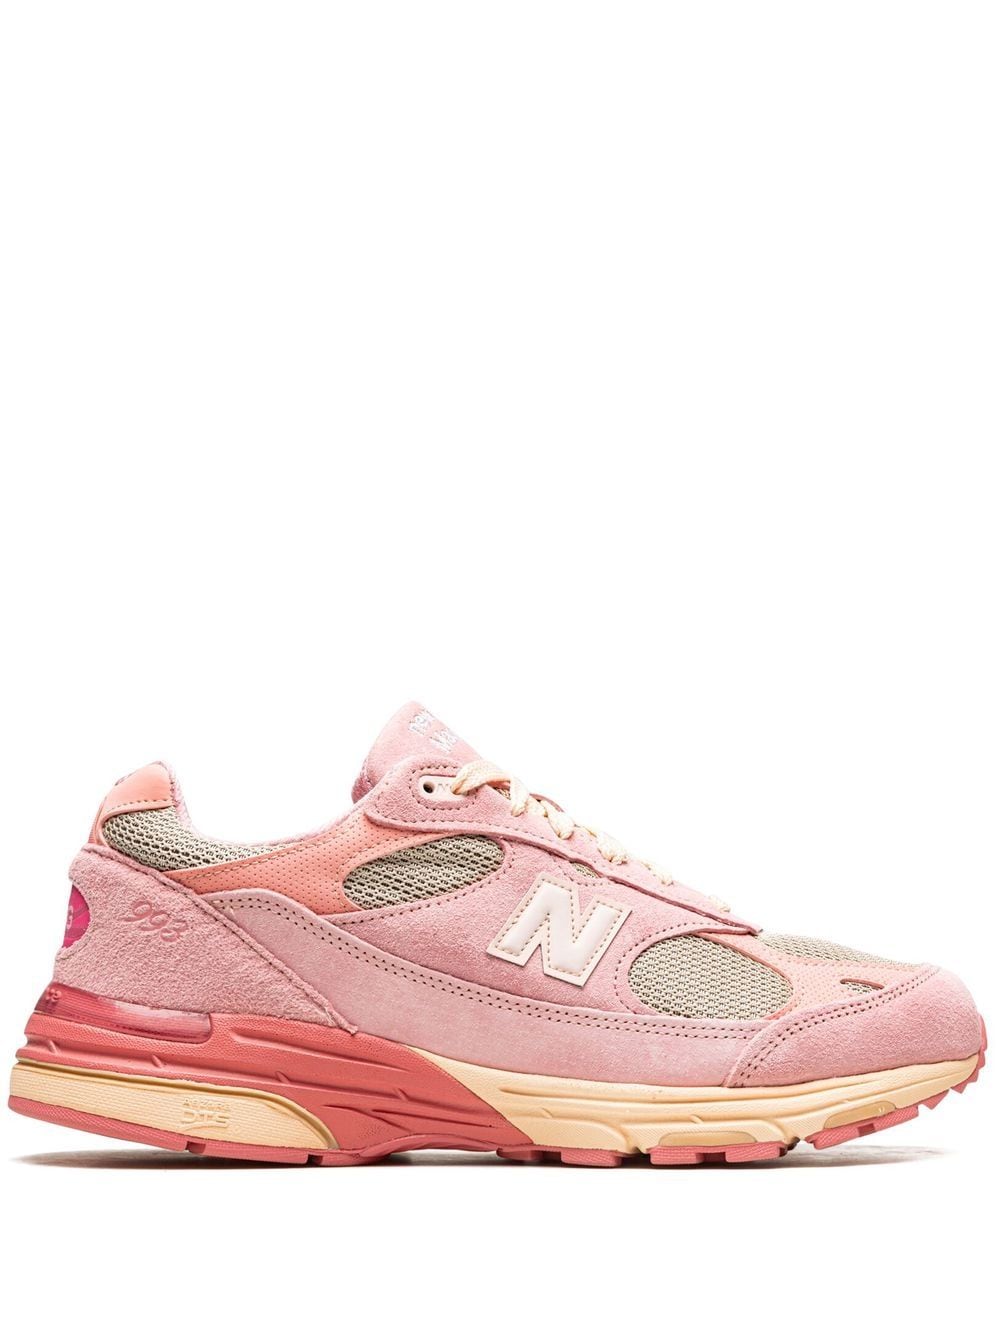 New Balance x Joe Freshgoods 993 sneakers - Pink